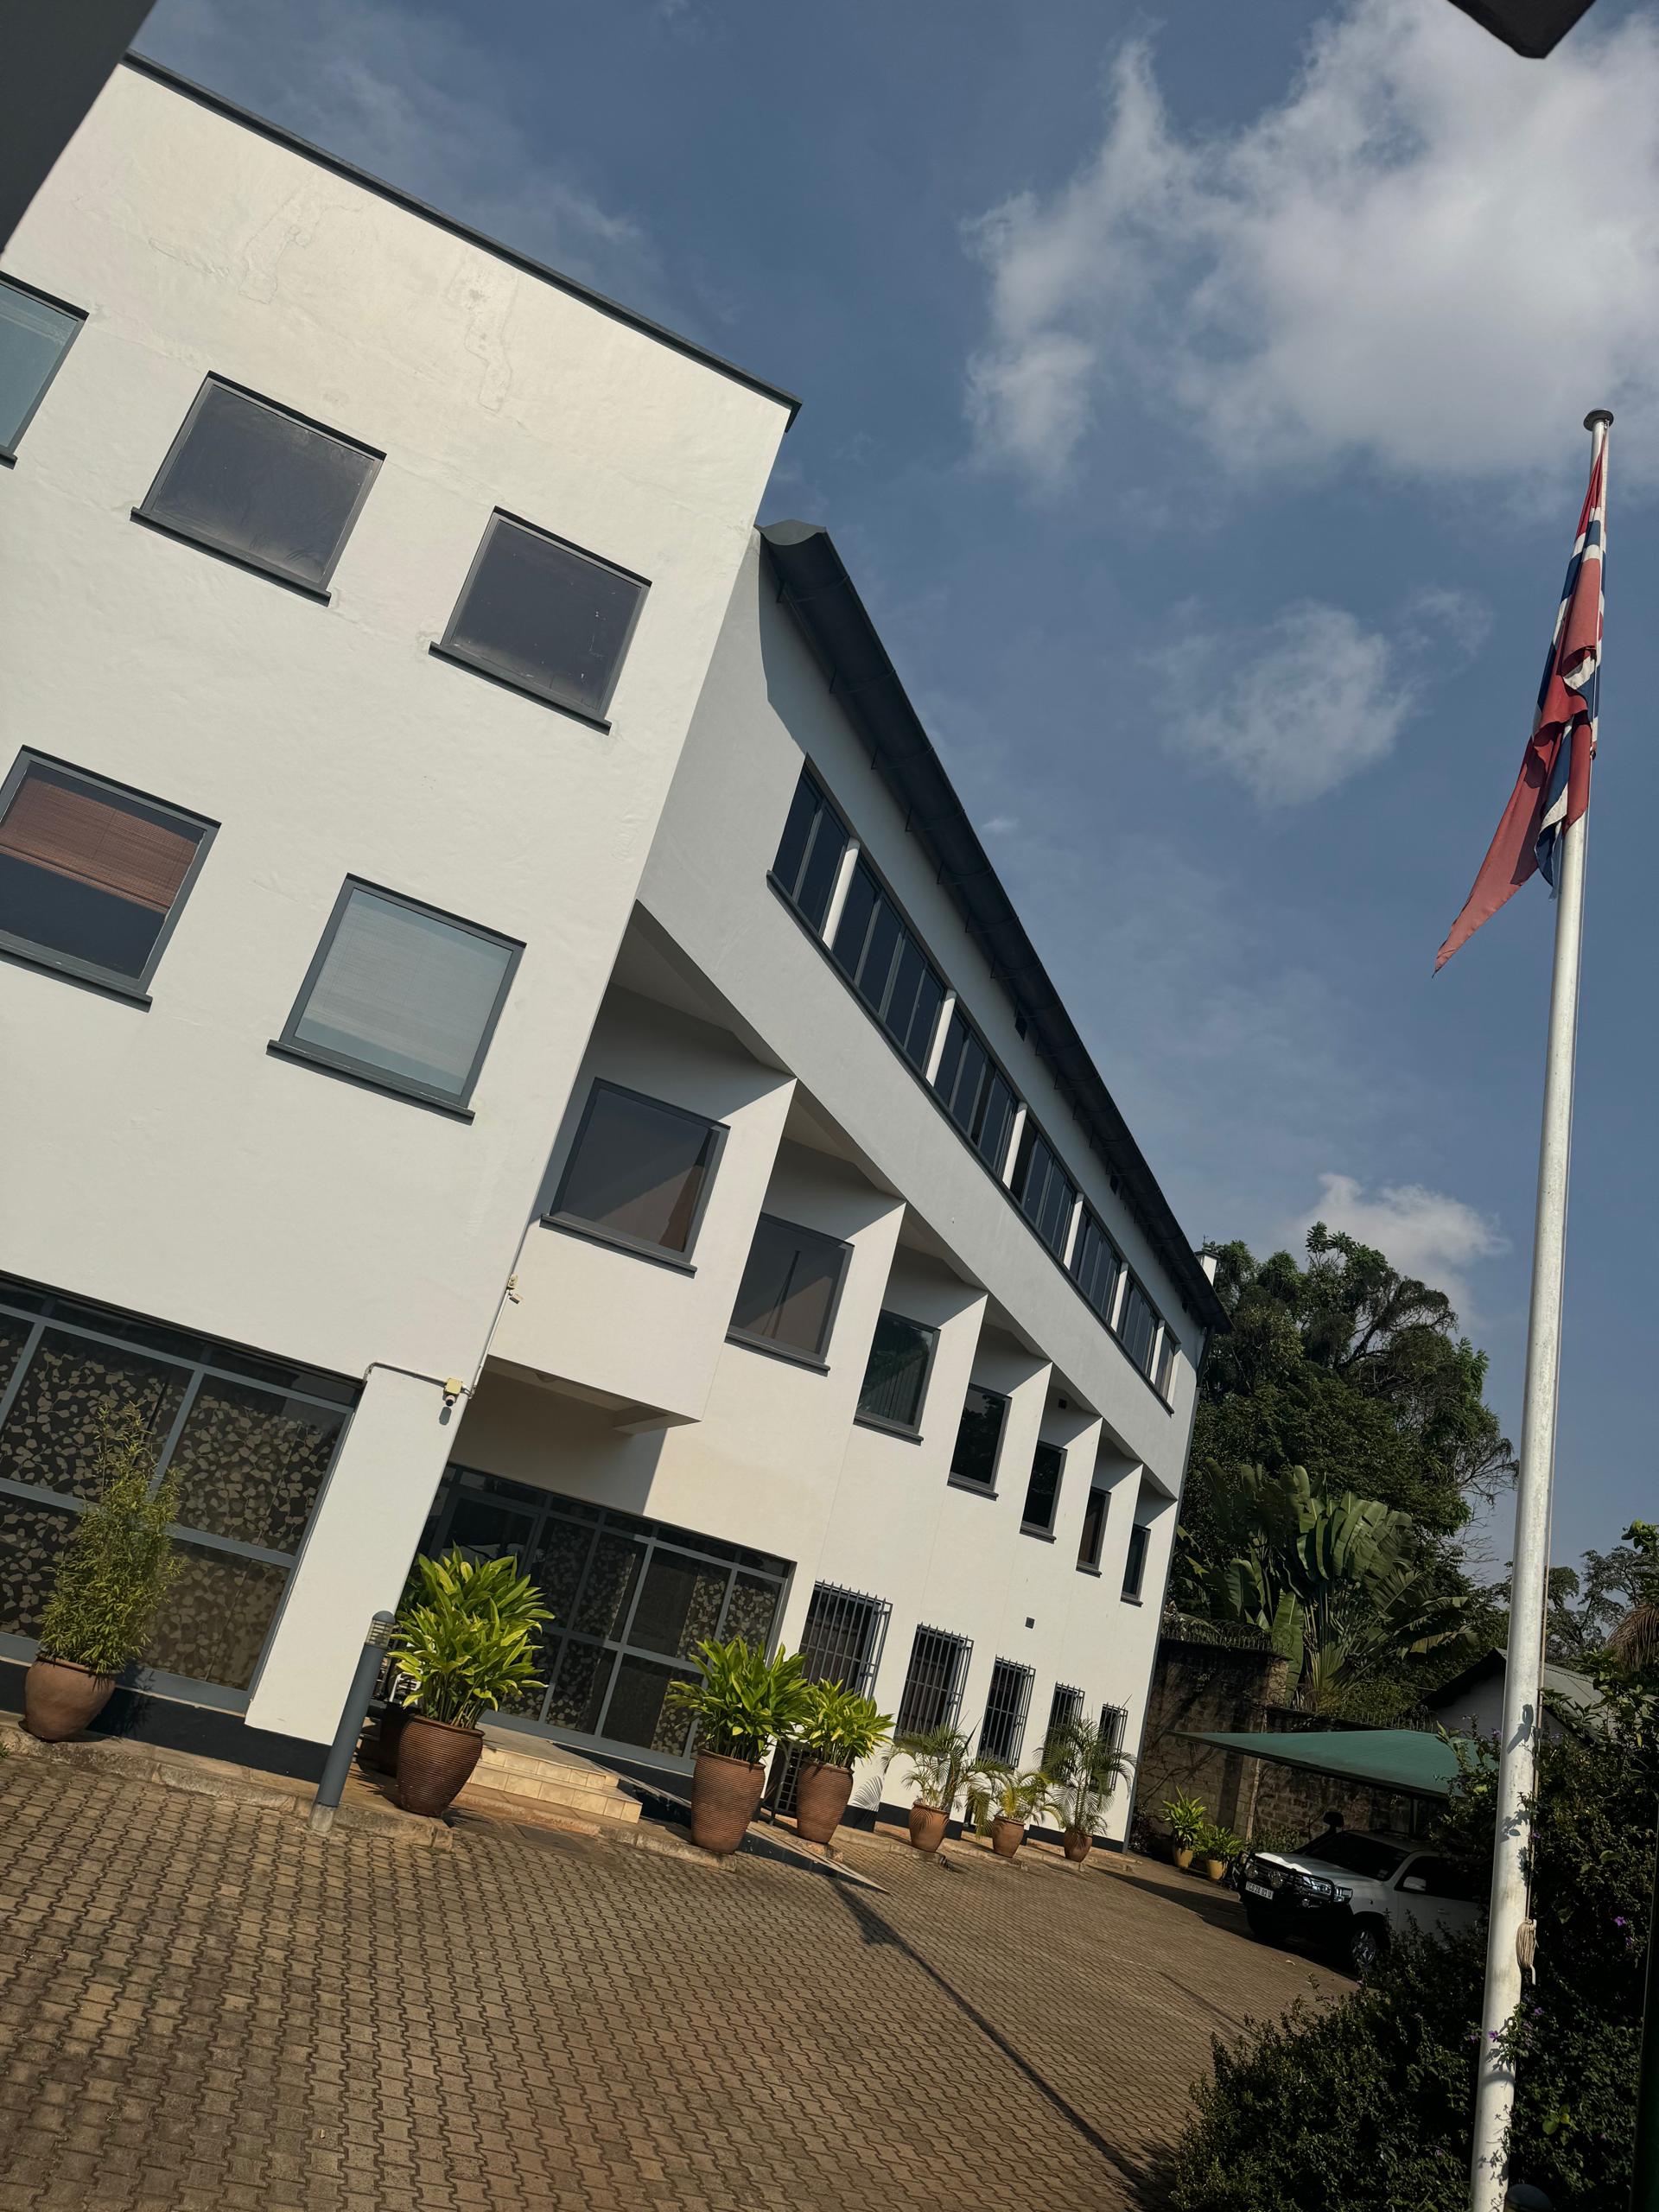 Norwegian Embassy closes in Uganda, symbolic flag lowering Marks end of era"